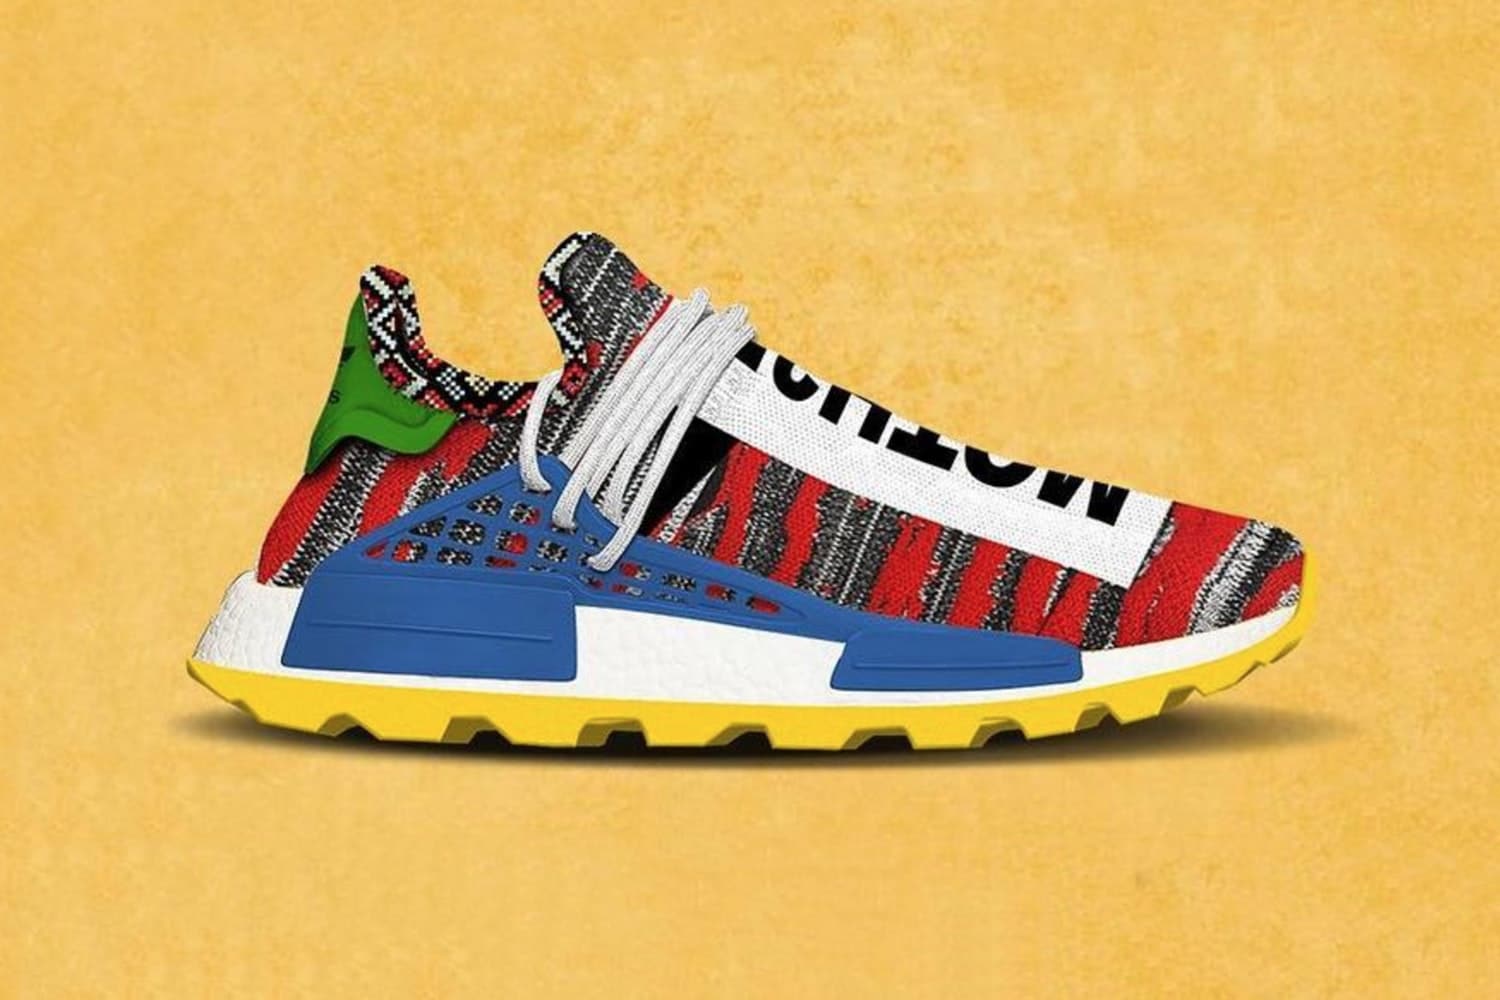 adidas x Pharrell Afro Hu NMD sneakers